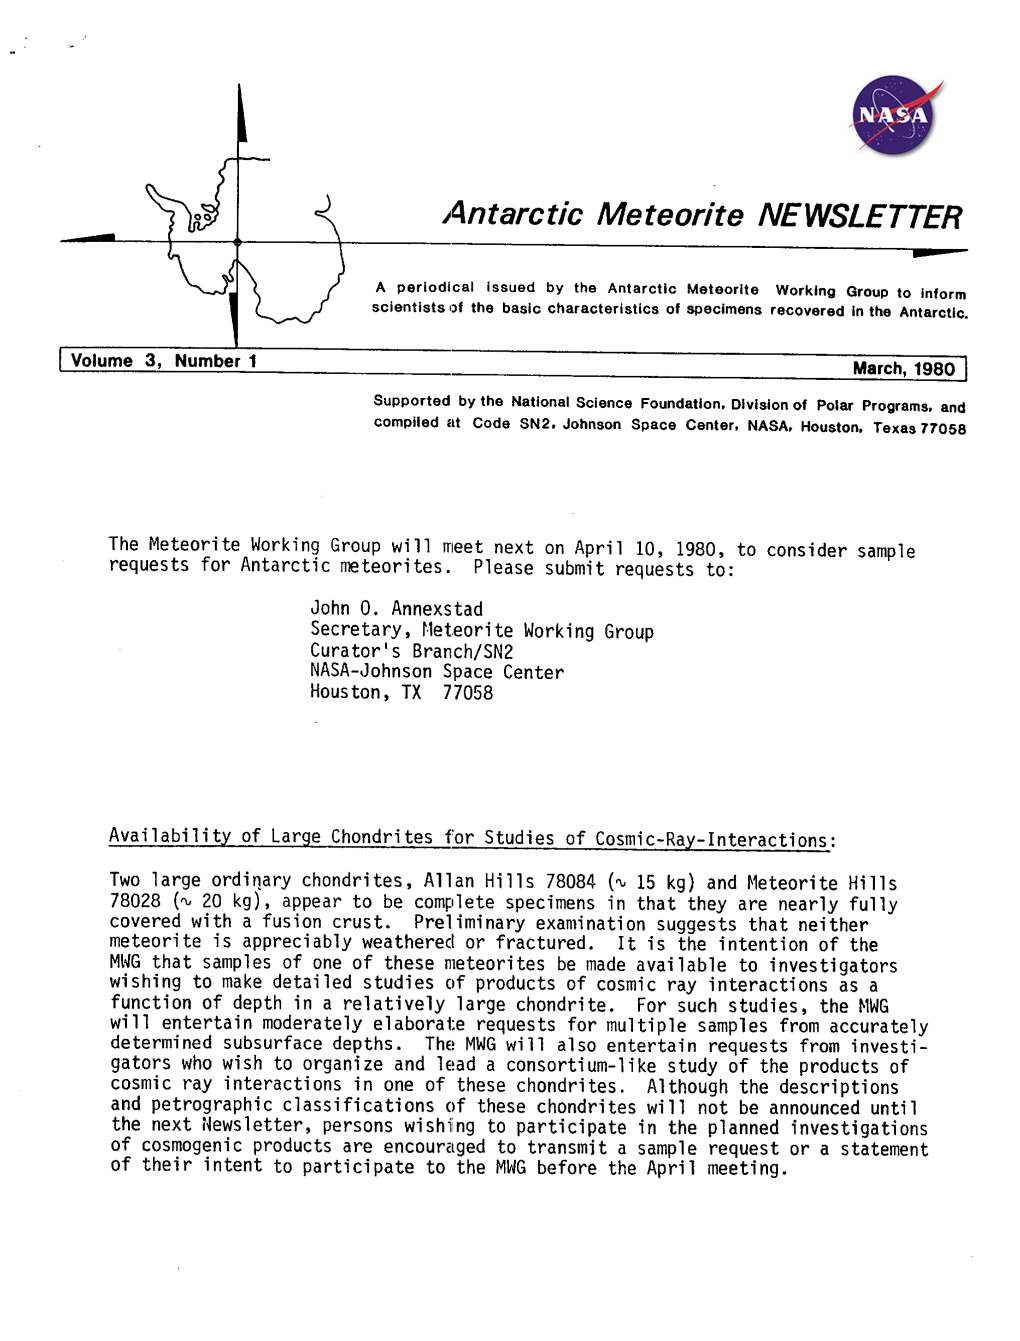 Antartic Meterorite Newsletter Volume 3